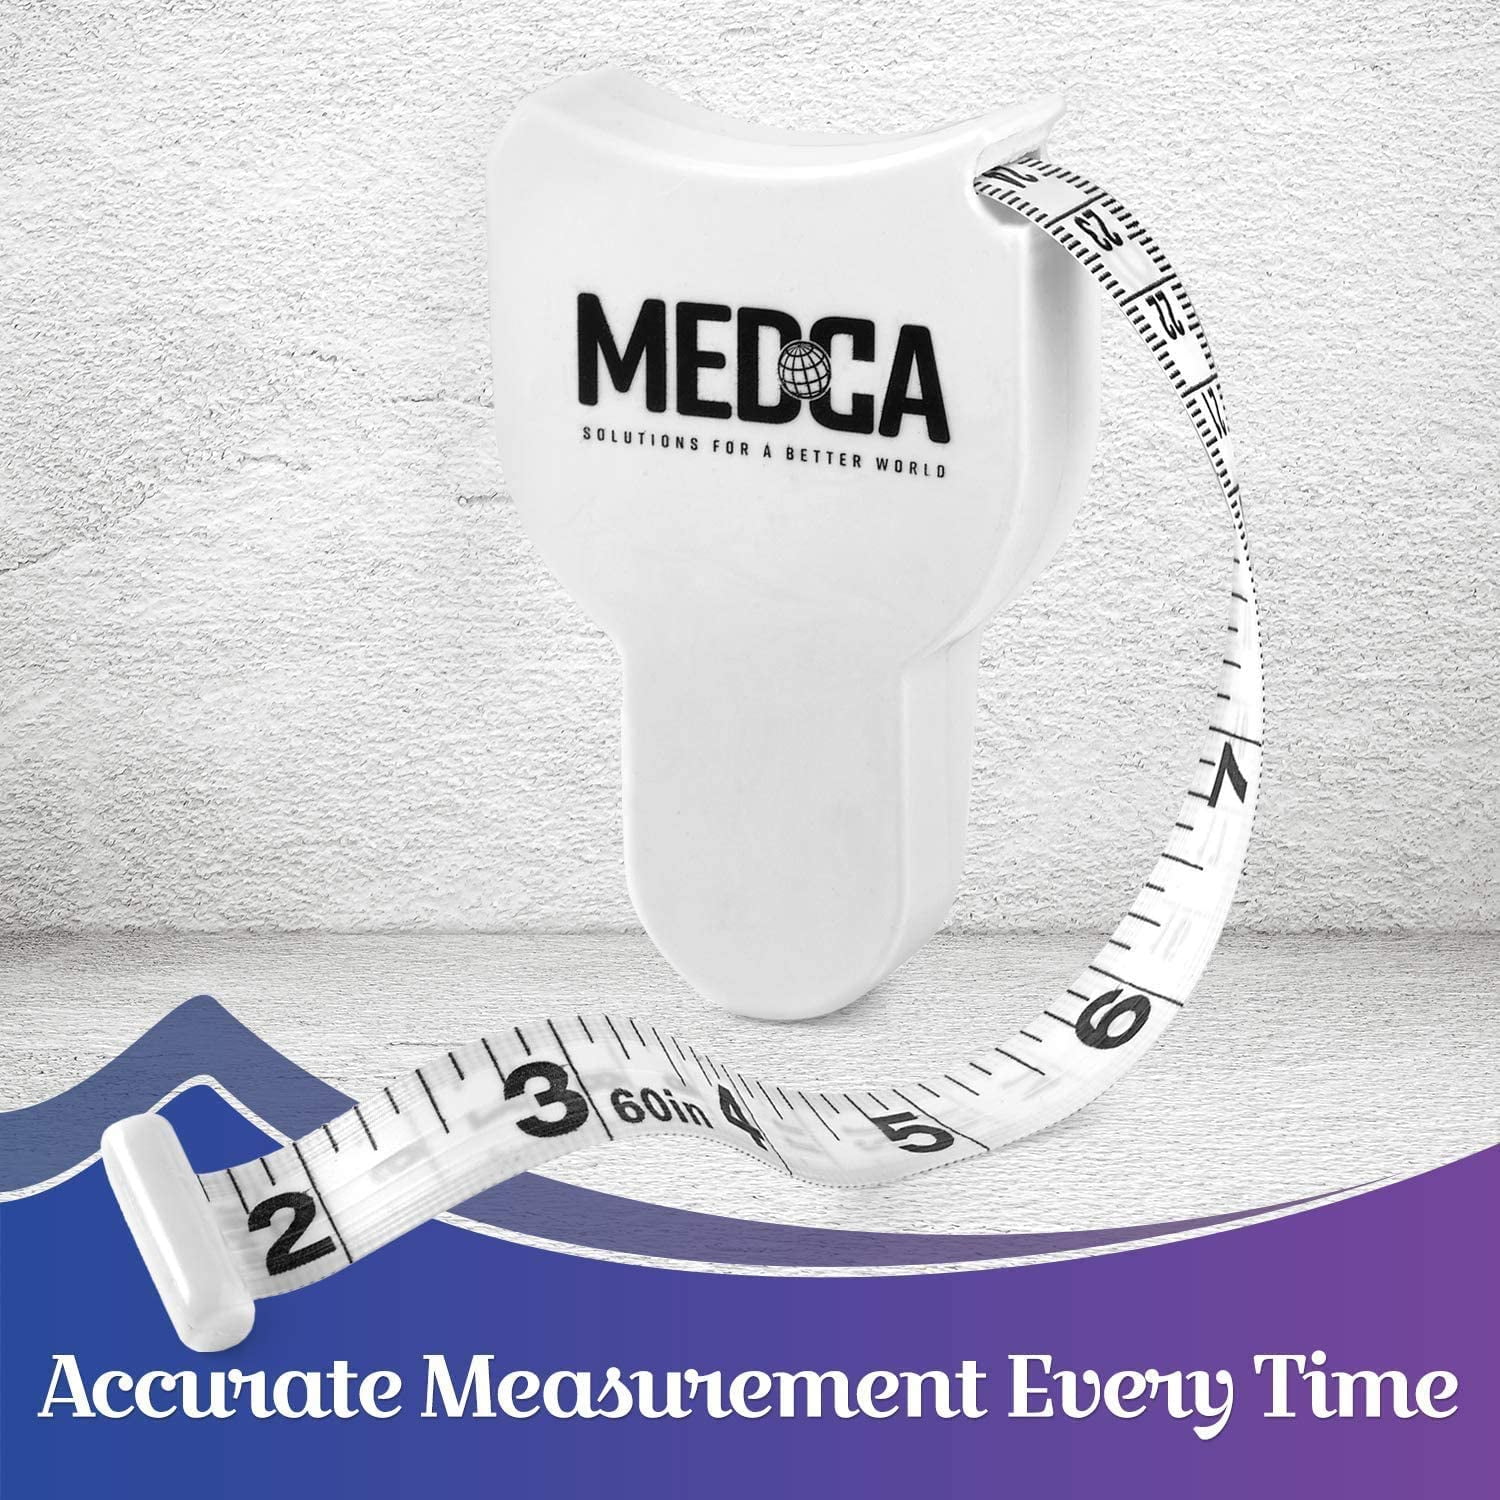 MEDca Body Fat Caliper Measuring Tape Skinfold Black Plastic Calipers by  Medca 